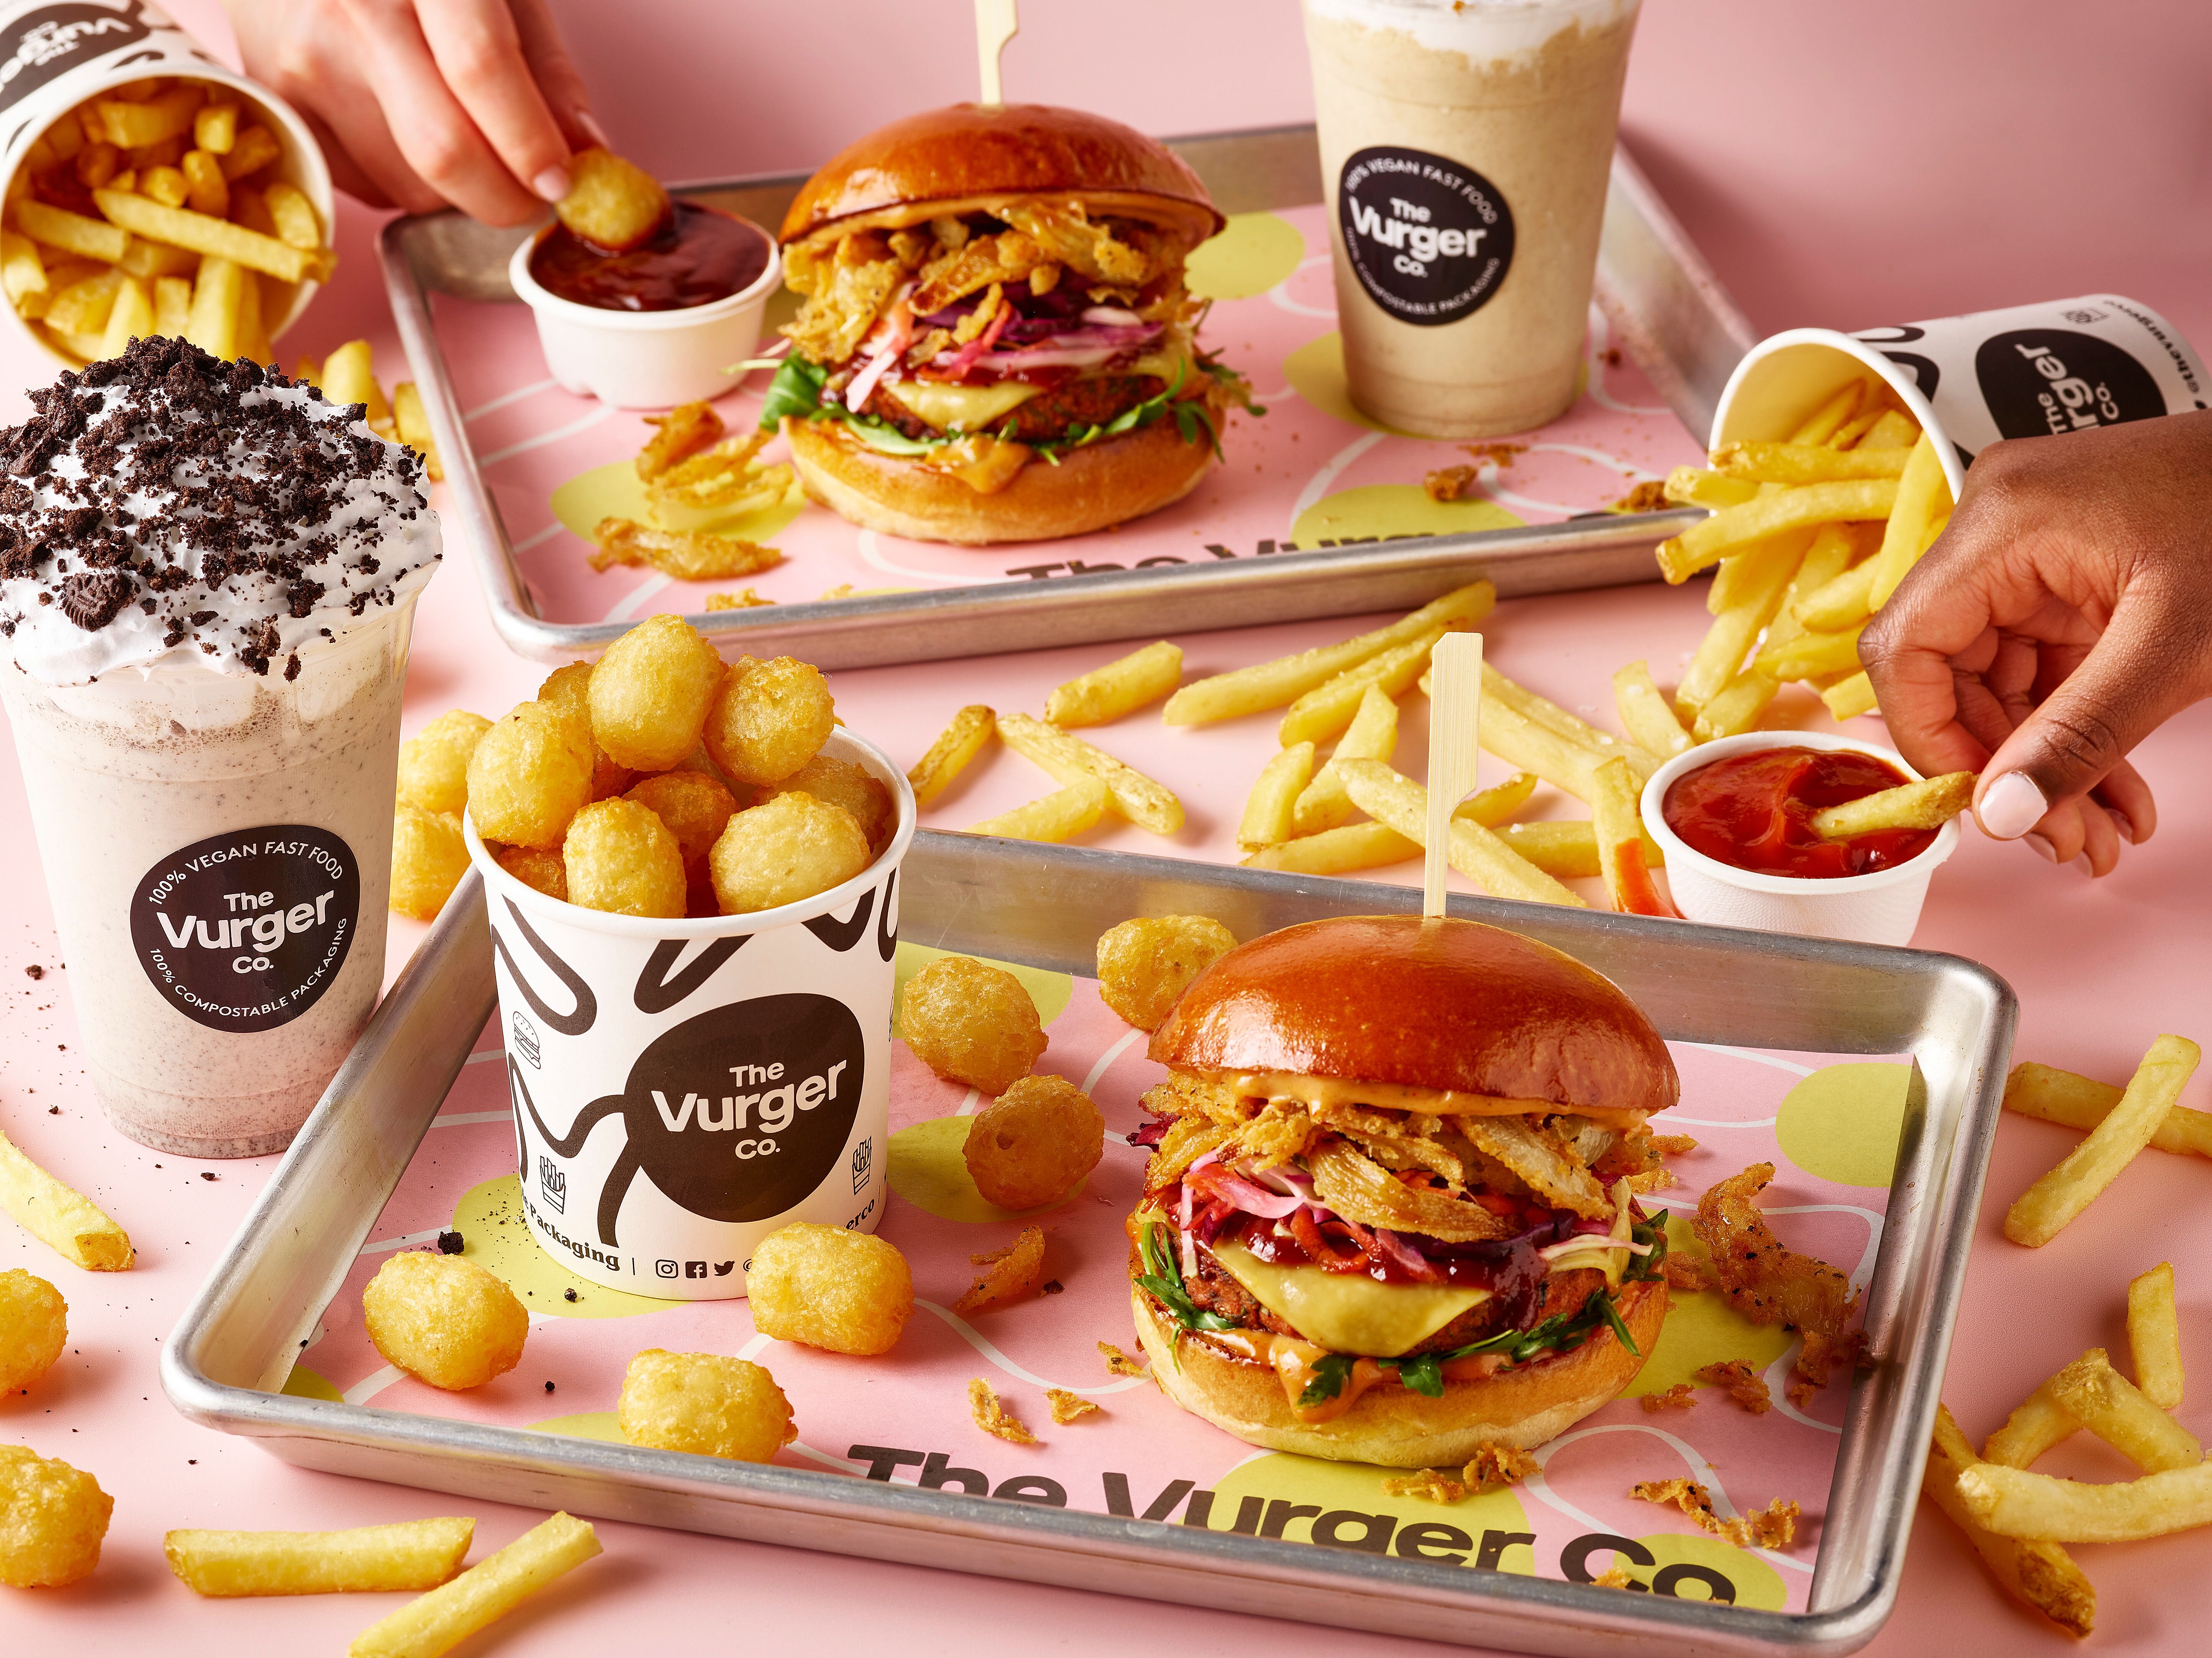 The Vurger Co to open first Manchester restaurant